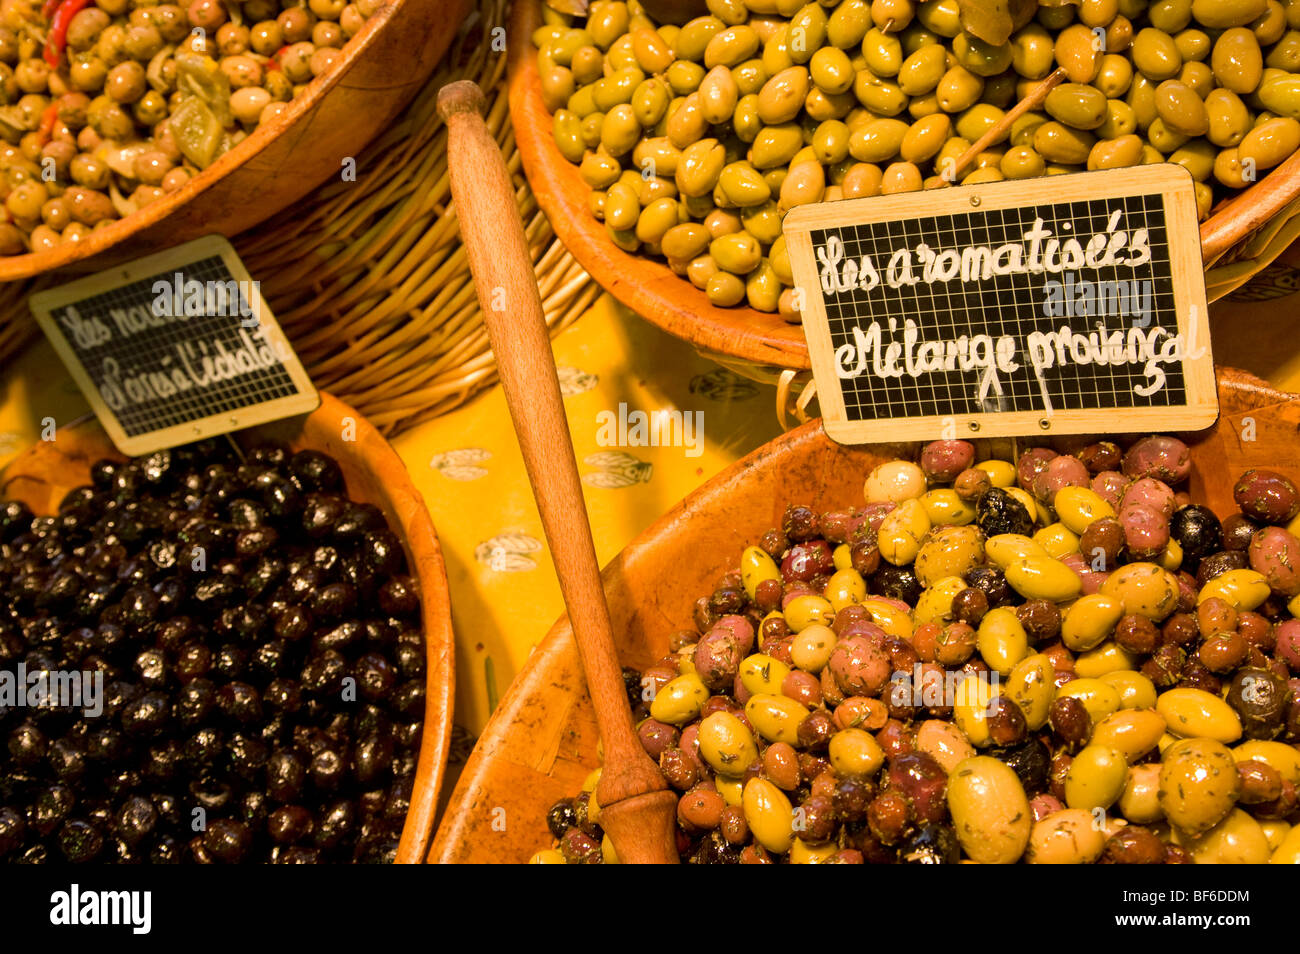 Olives, marché provençal, Mars, Antibes, Cote d Azur, Provence, France Banque D'Images